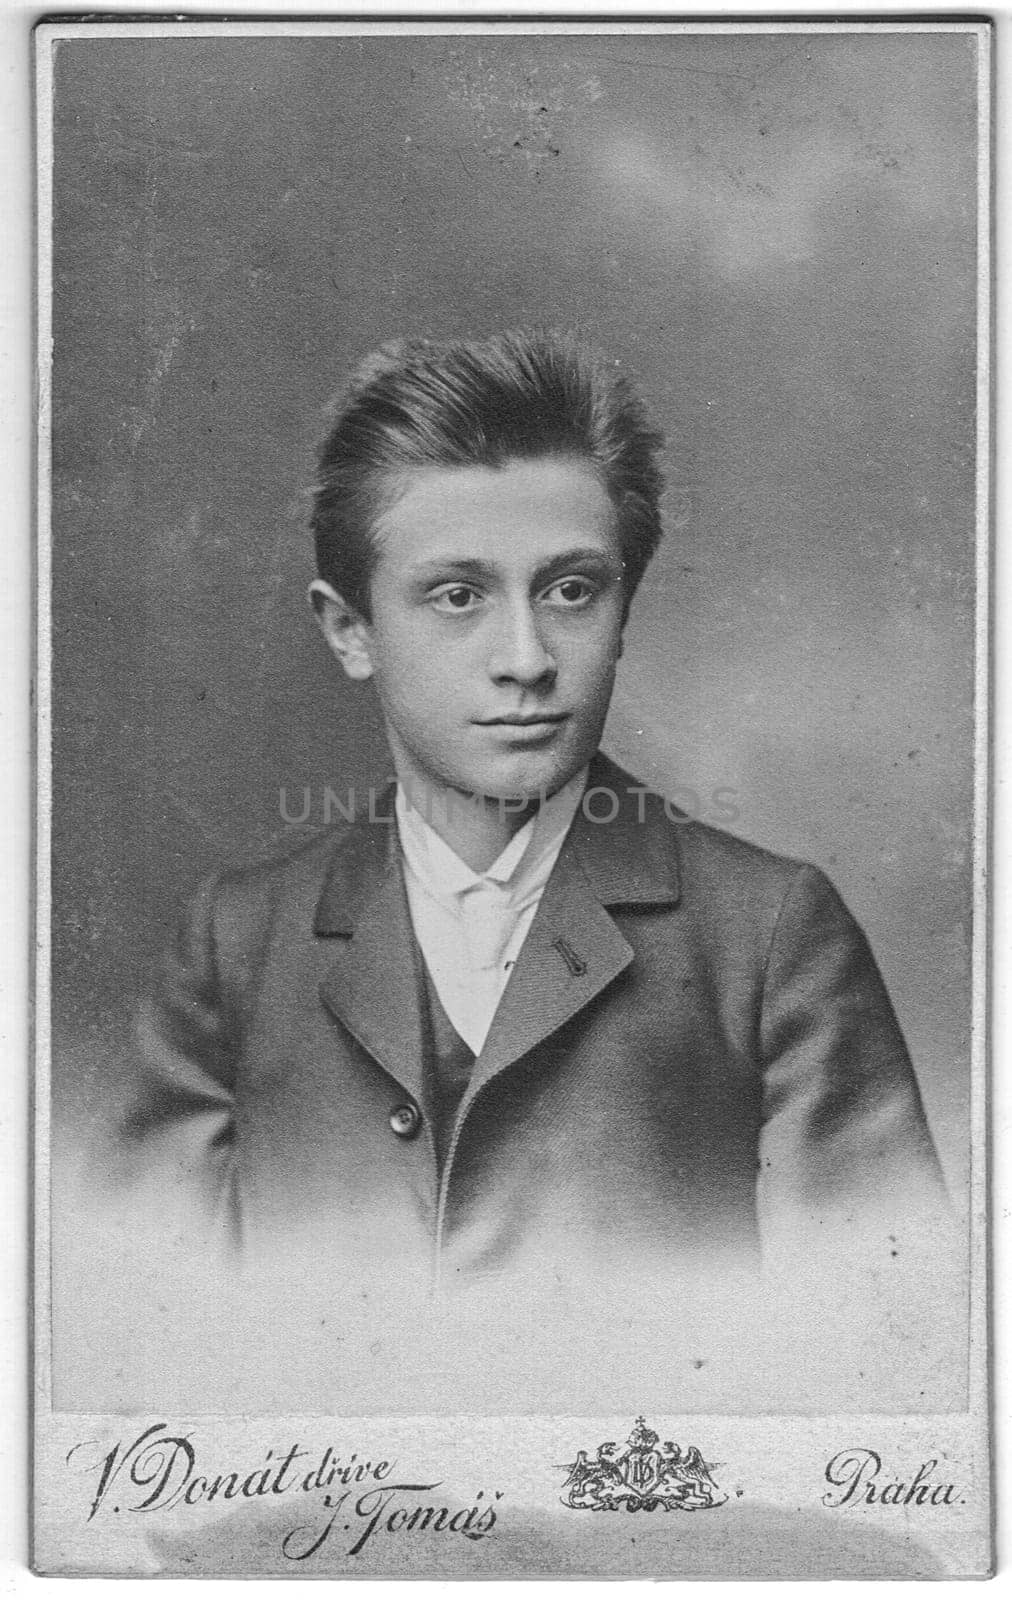 PRAHA-PRAG, AUSTRIA - HUNGARY - CIRCA 1910: Vintage cabinet card shows portrait of the young man. Photo was taken in a photo studio. Photo was taken in Austro-Hungarian Empire or also Austro-Hungarian Monarchy by roman_nerud